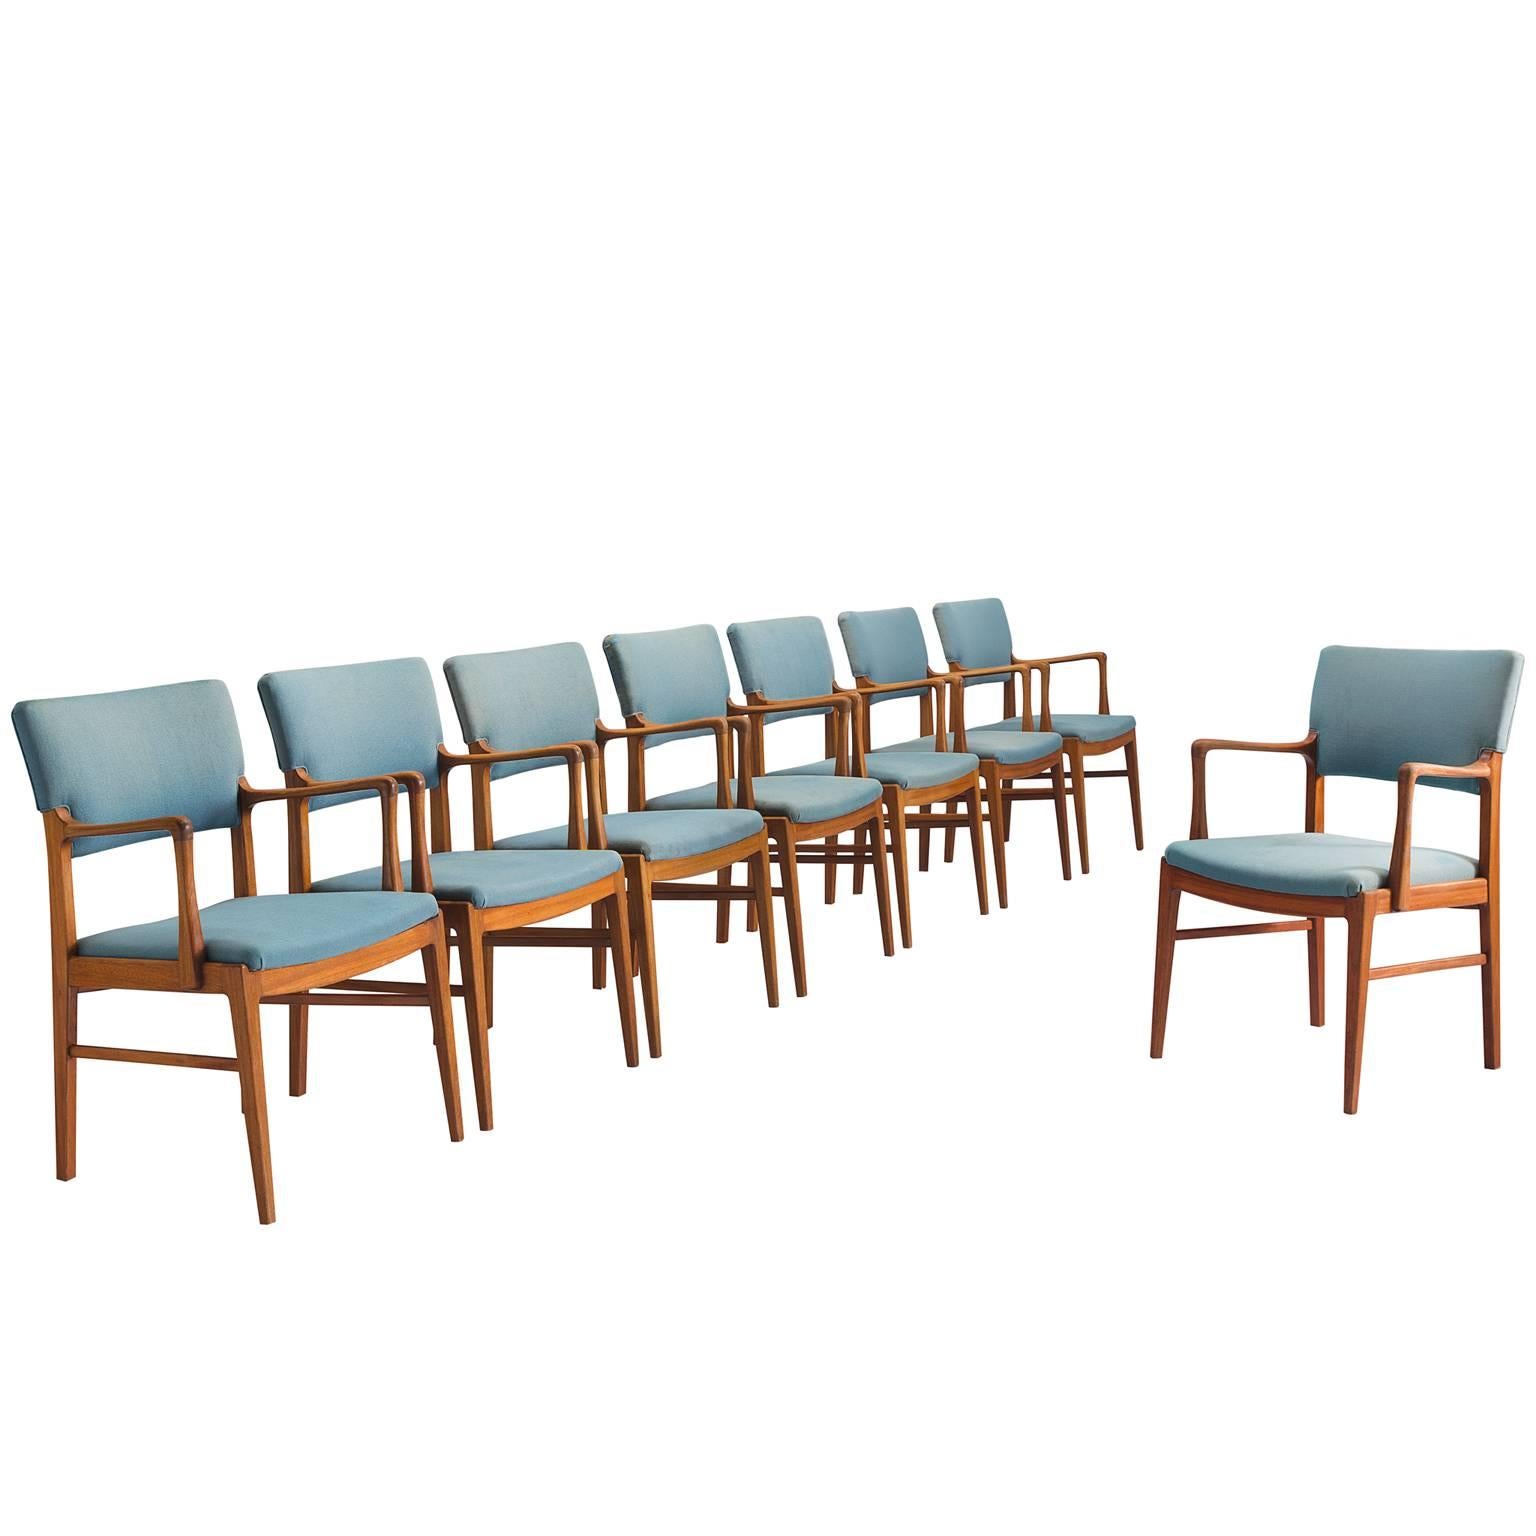 Set of Scandinavian Dining Chairs in Teak